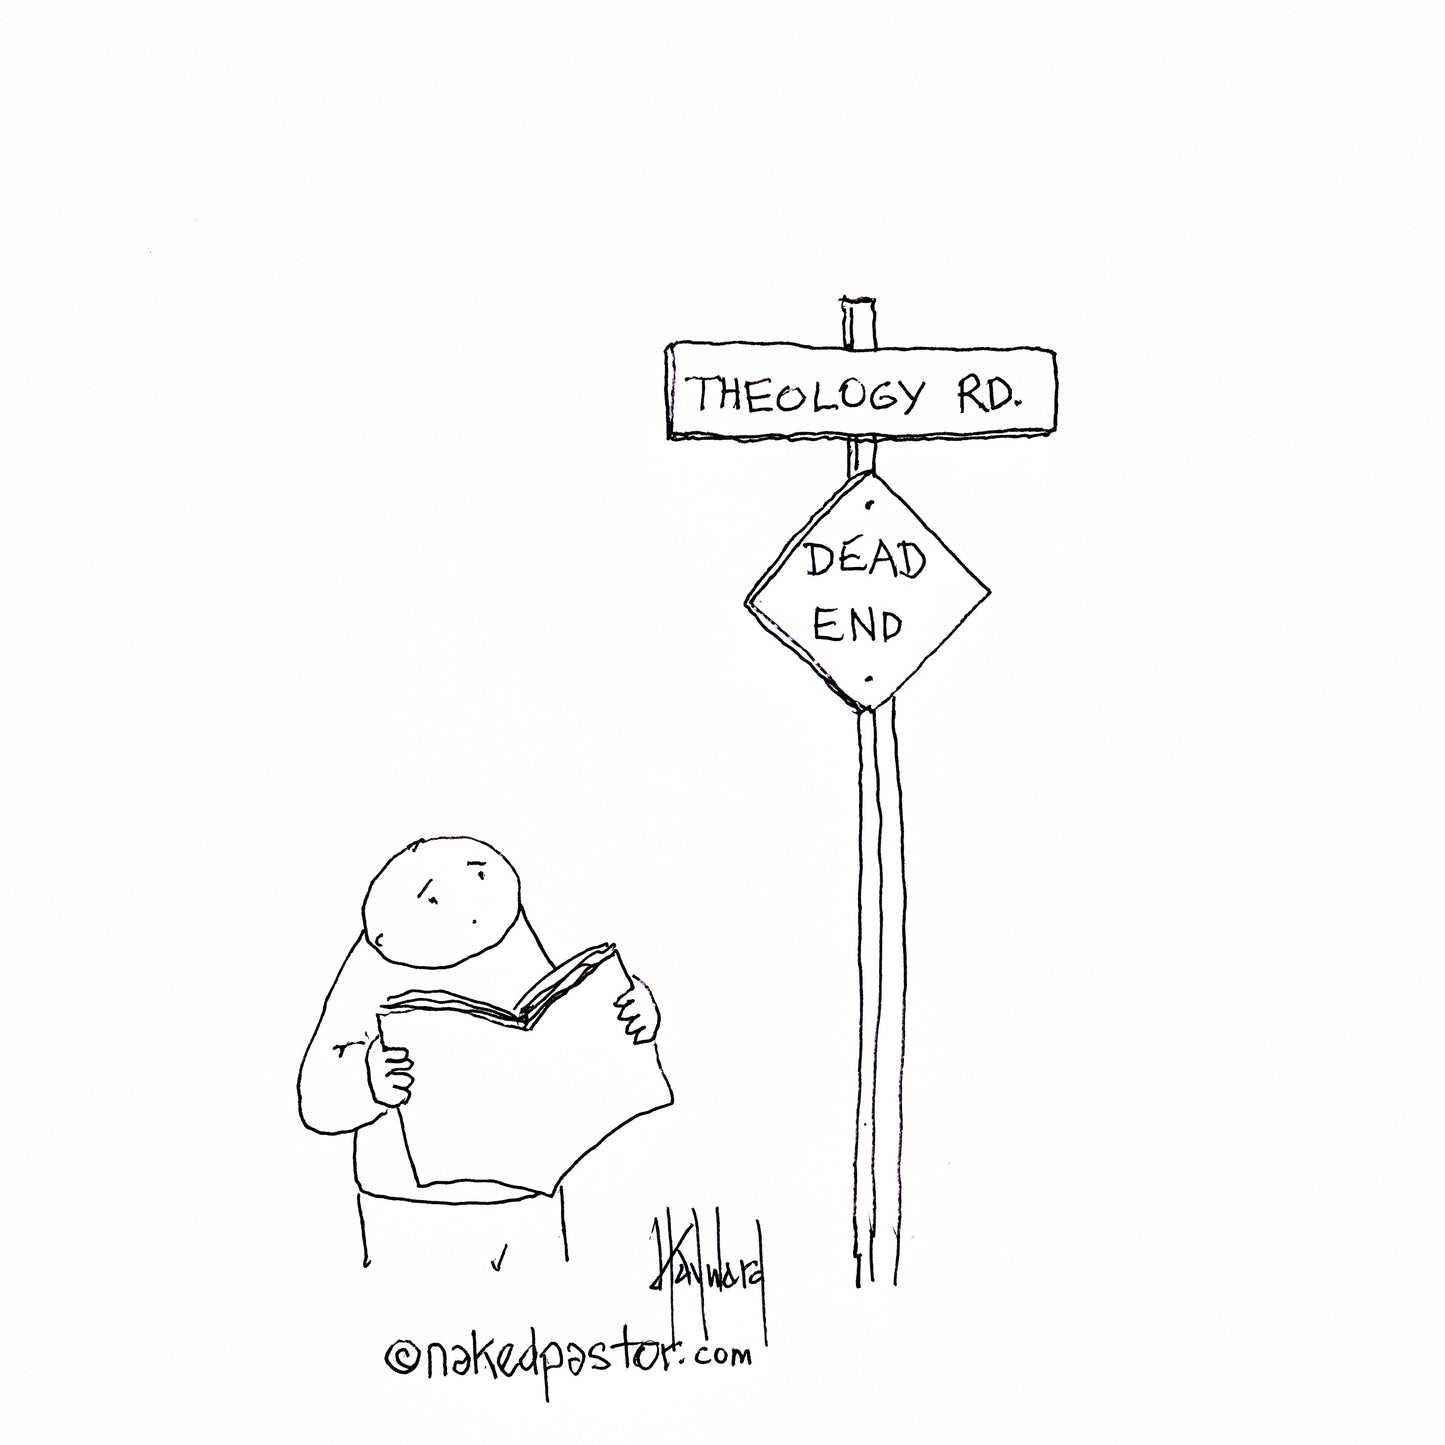 Theology Road Dead End Digital Cartoon